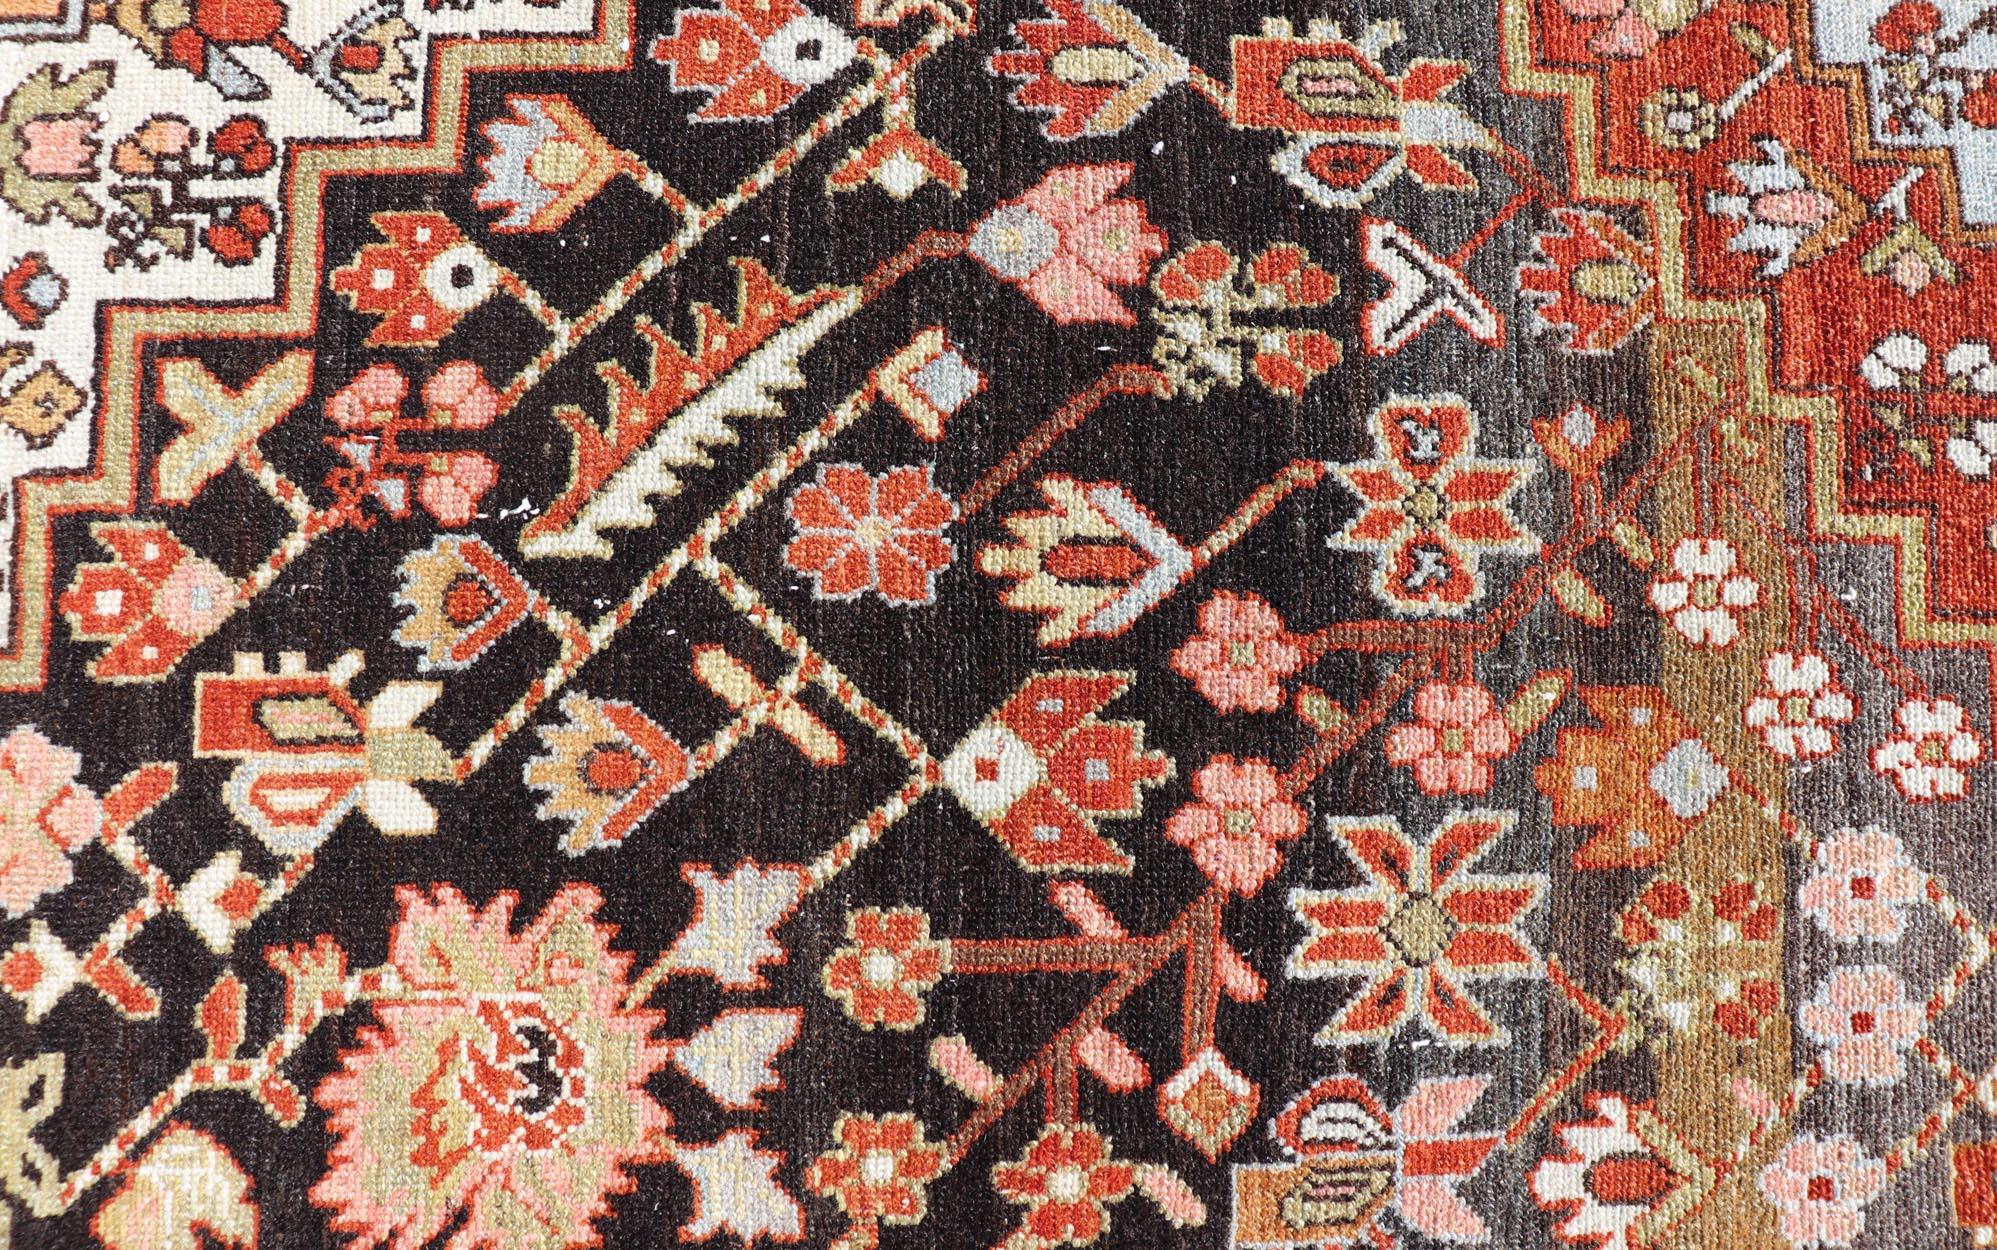 20th Century Antique Persian Tribal Design Bakhtiari Rug in Multi Colors By Keivan Woven Arts For Sale